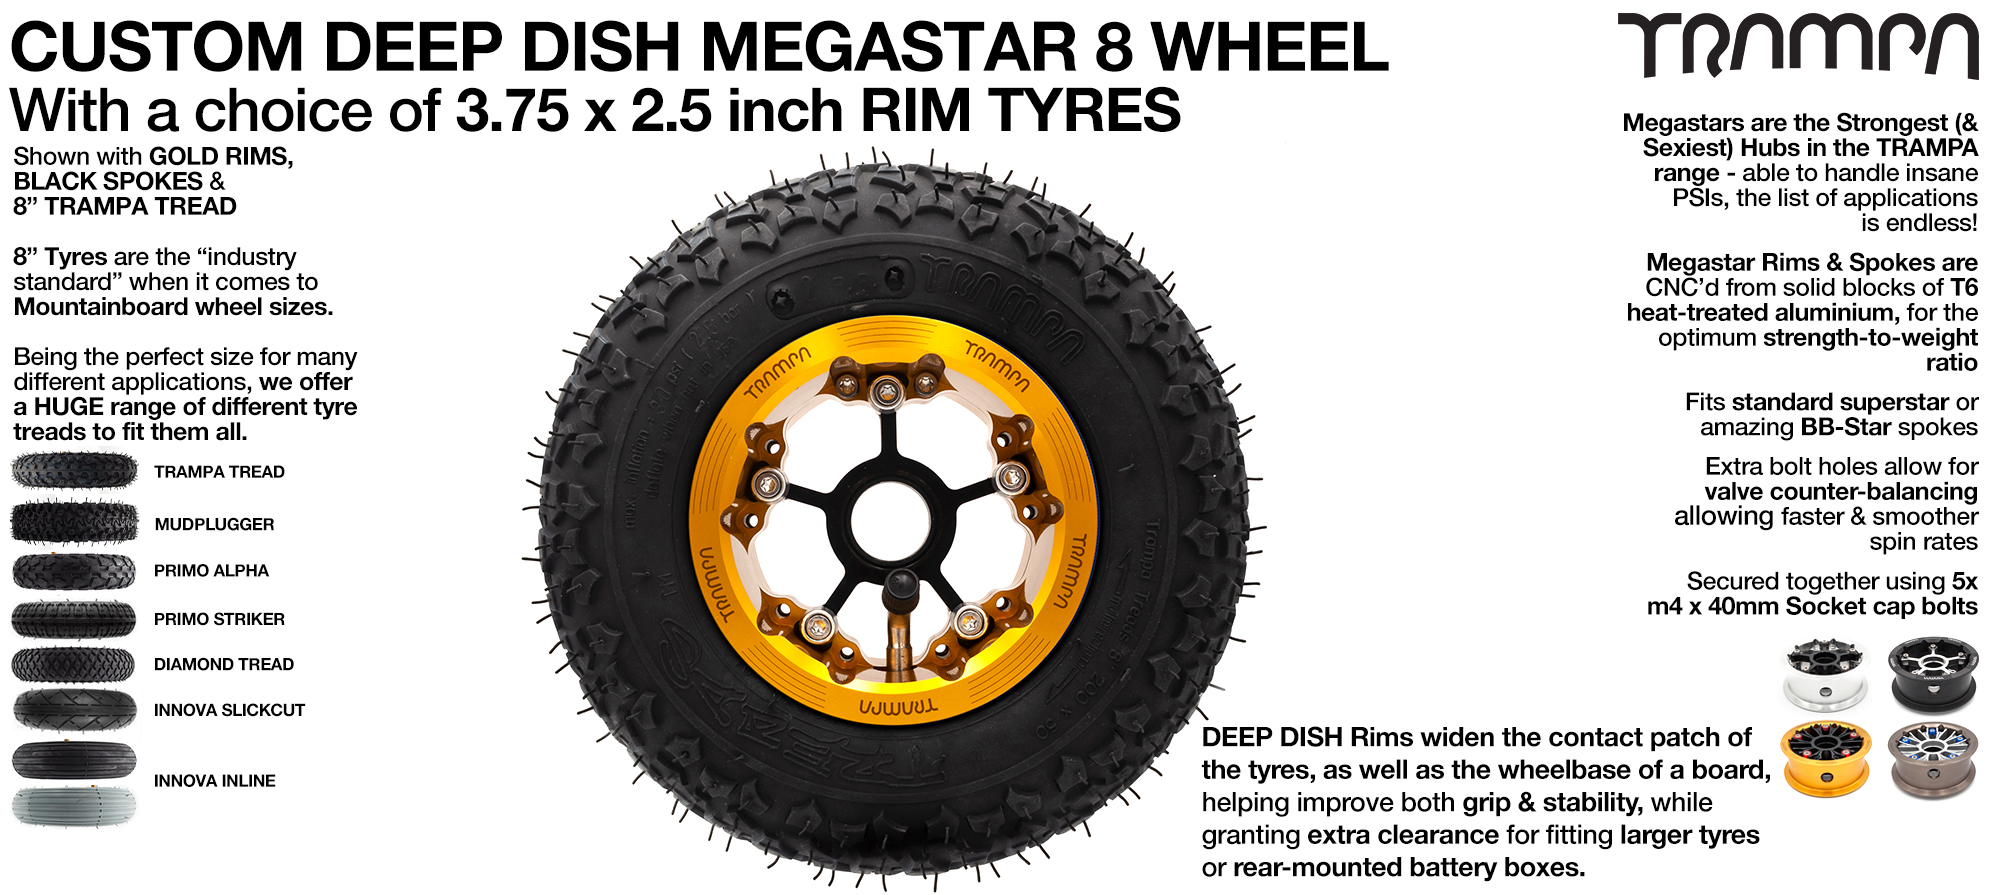 DEEP-DISH MEGASTAR 8 Wheel - CUSTOM 8 inch Tyre 